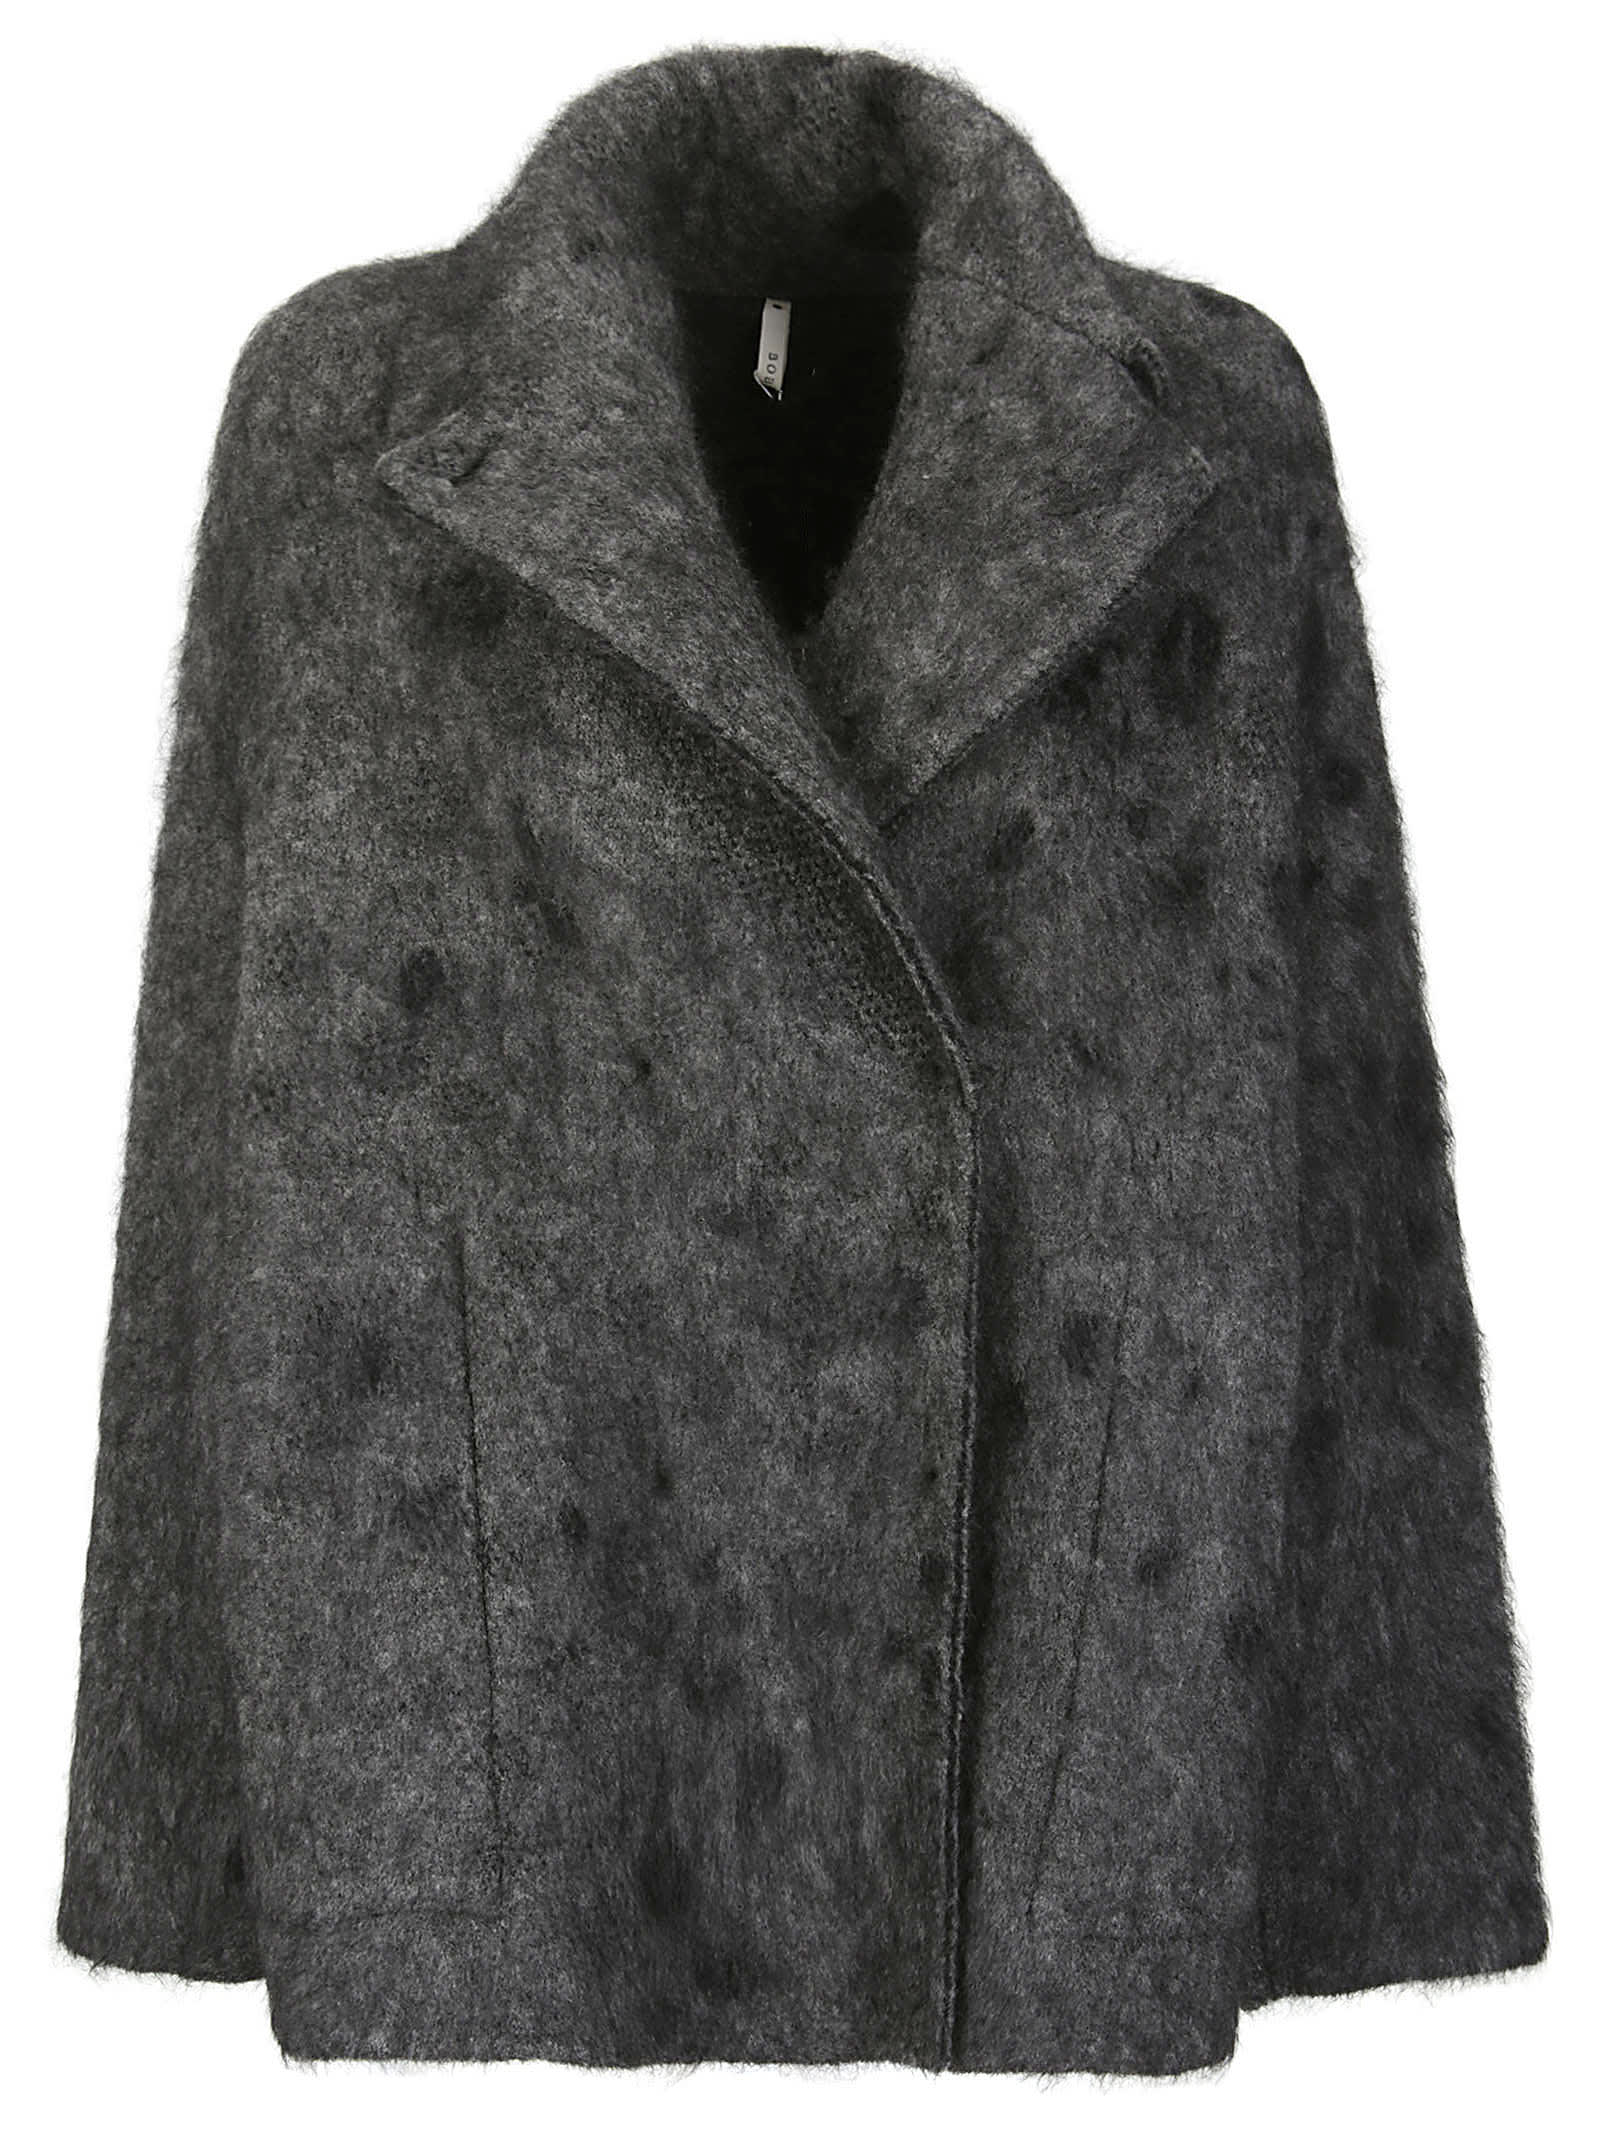 Boboutic Double Breast Fur Jacket